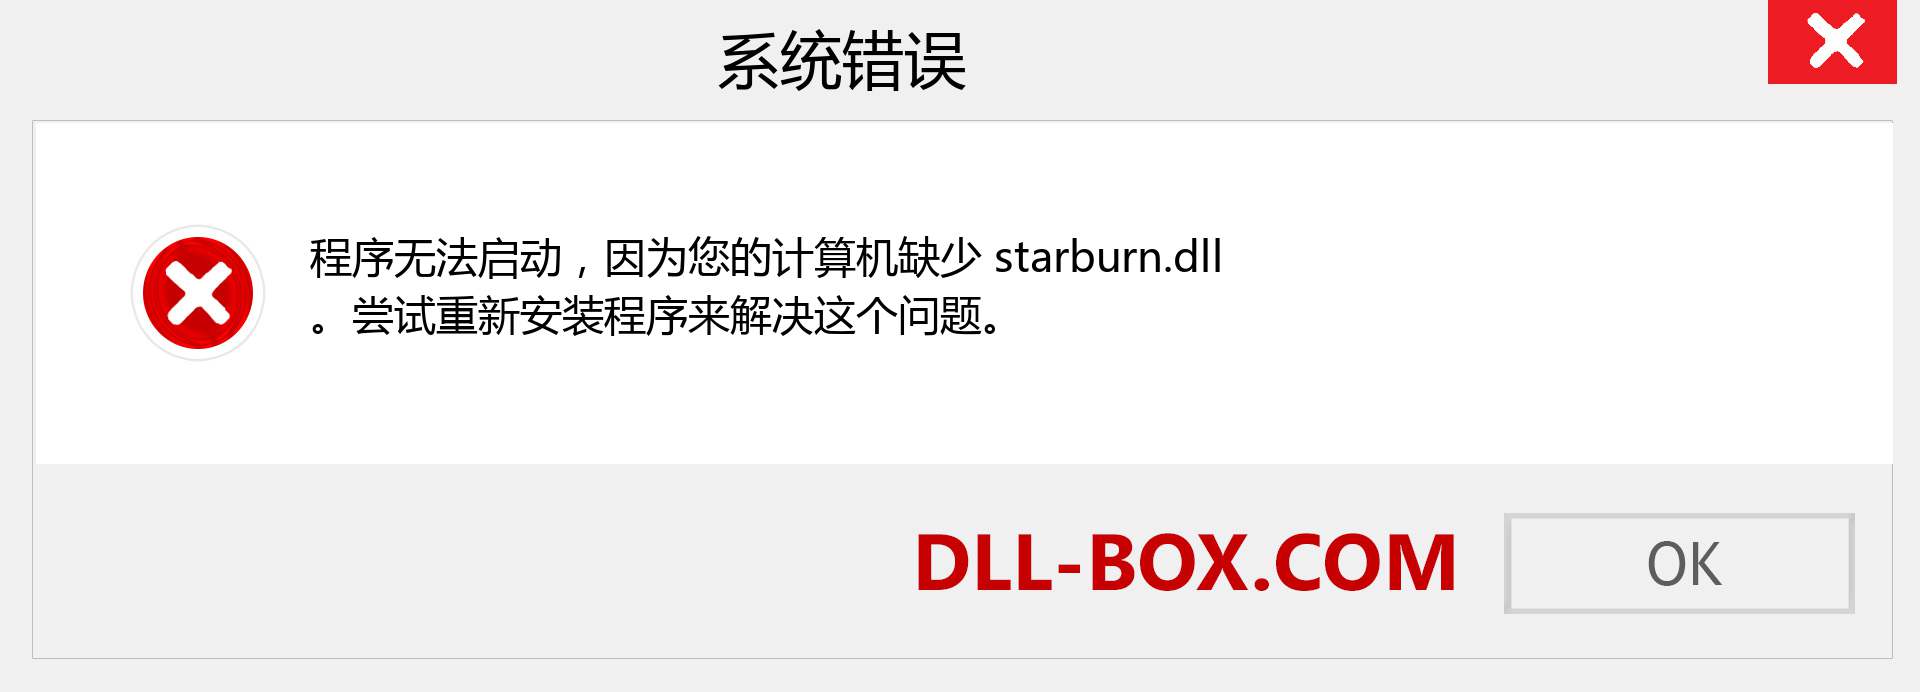 starburn.dll 文件丢失？。 适用于 Windows 7、8、10 的下载 - 修复 Windows、照片、图像上的 starburn dll 丢失错误